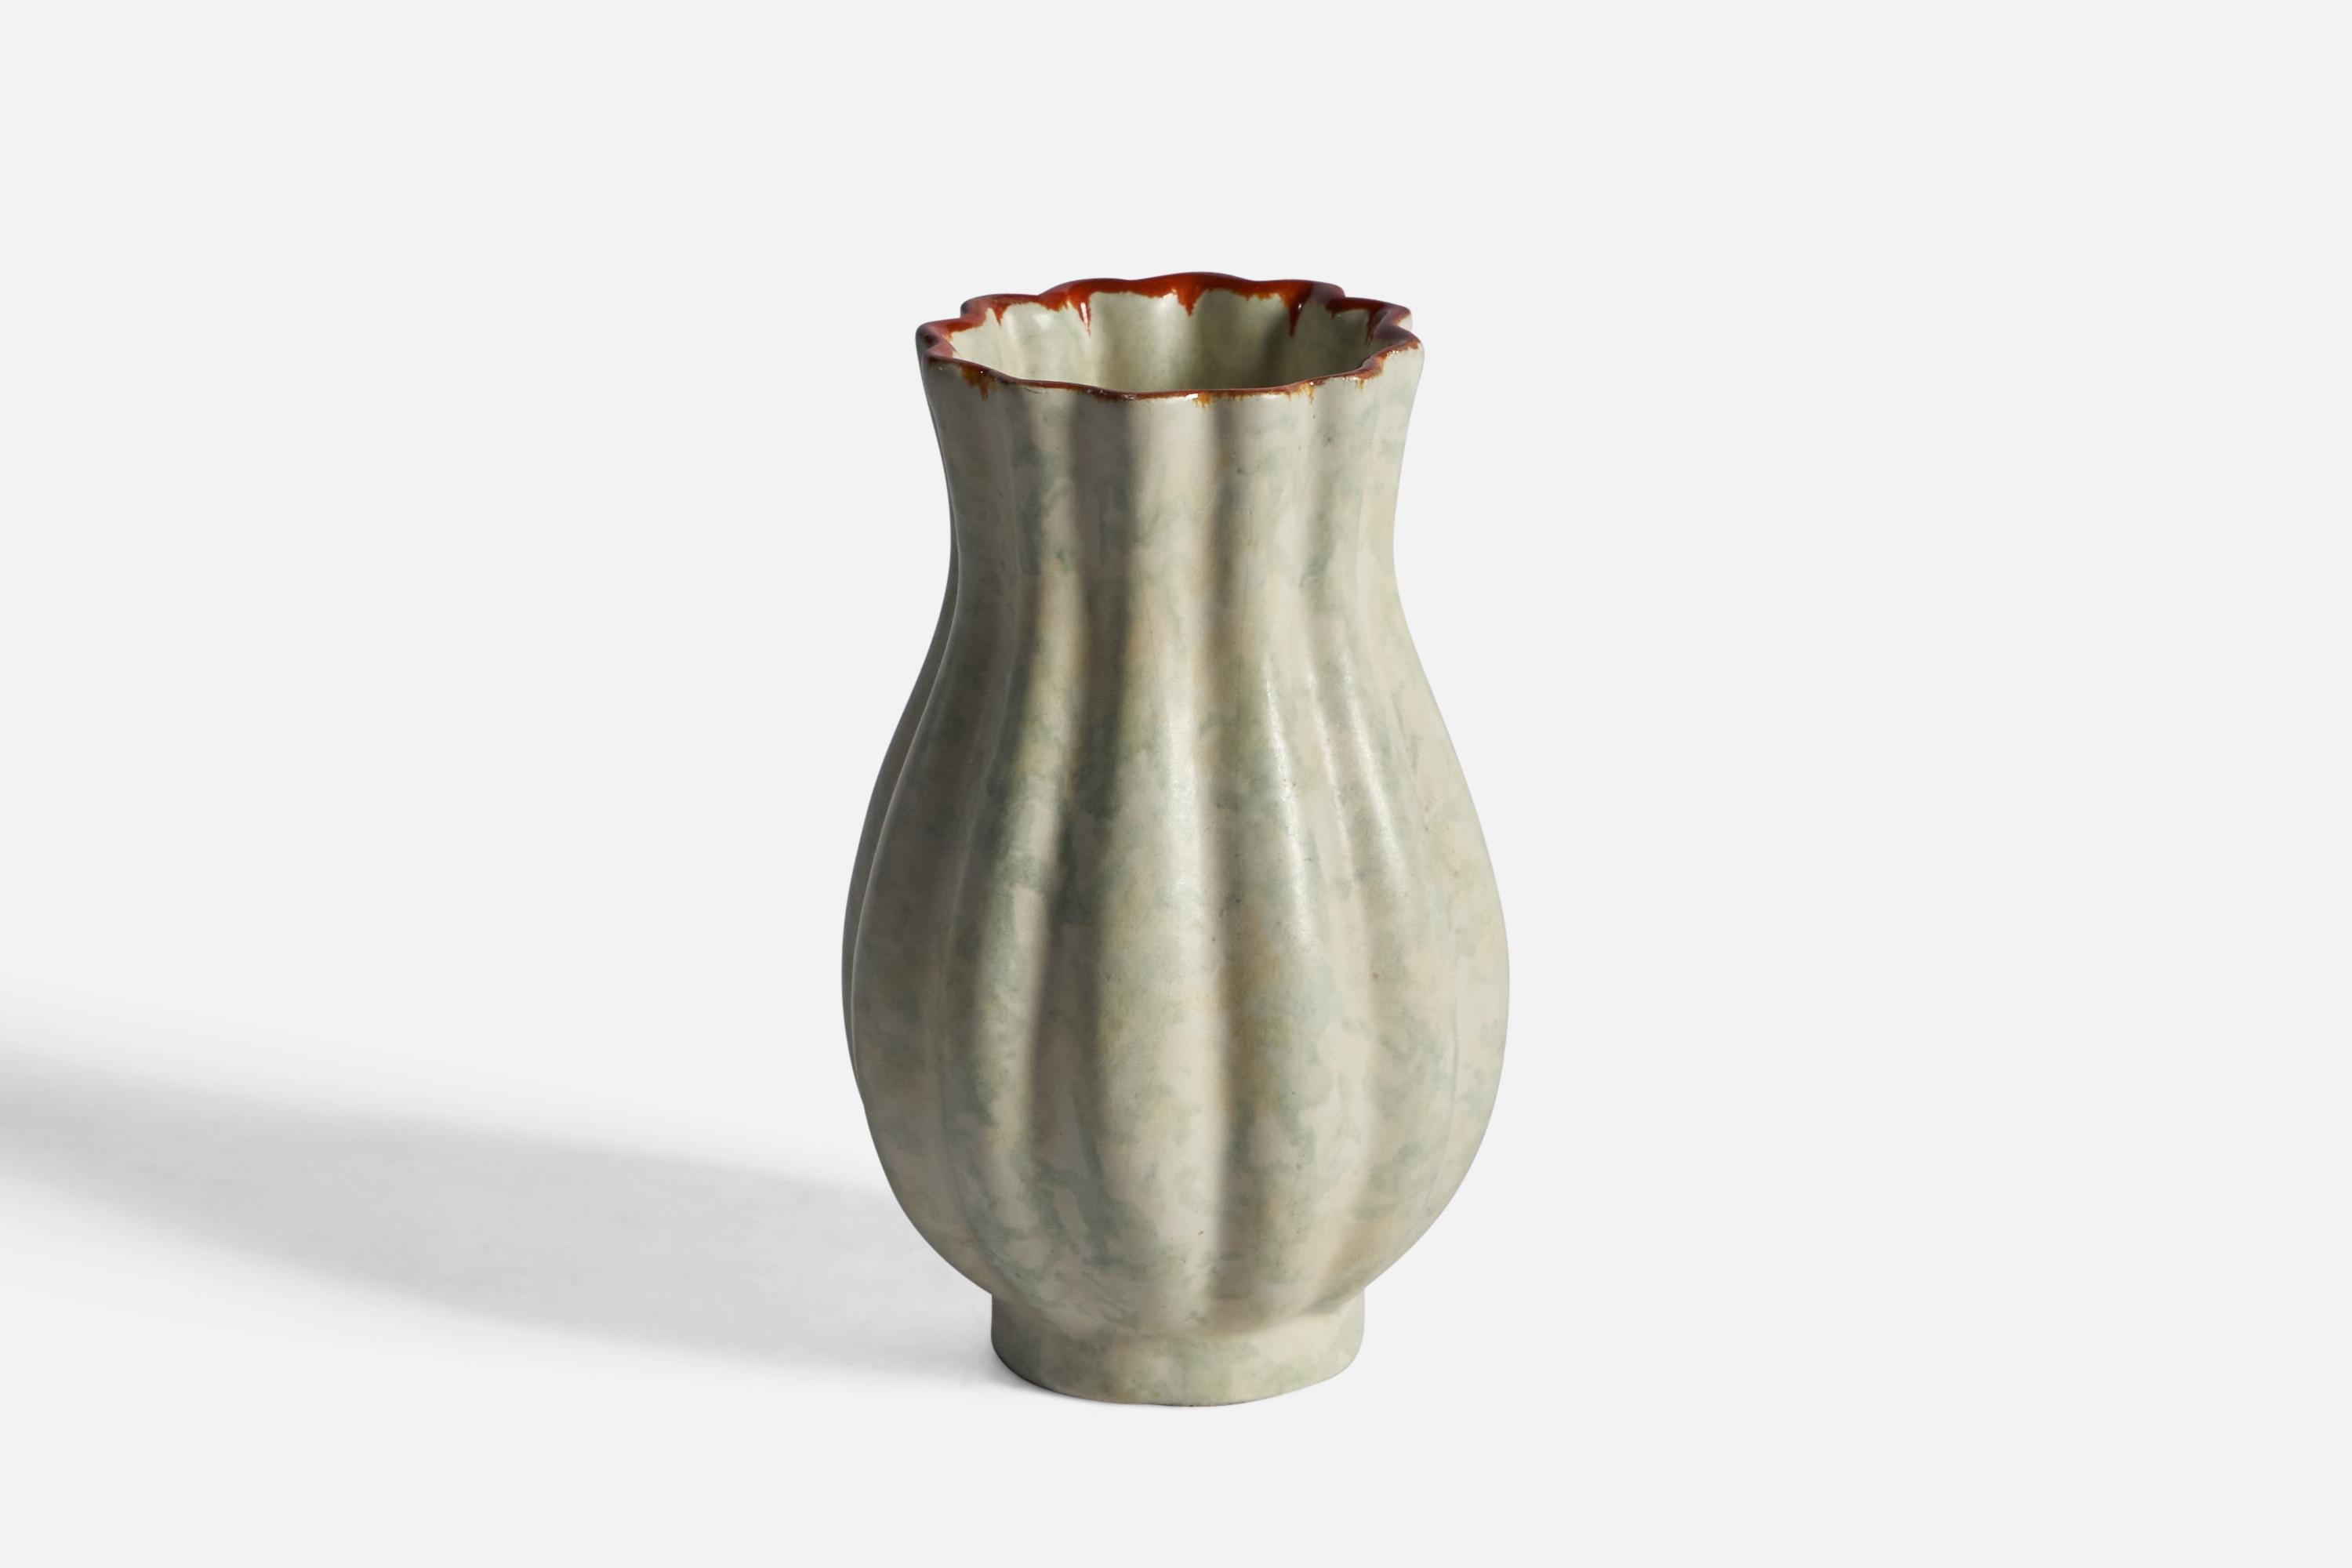 A fluted grey-glazed earthenware vase, designed and produced by Upsala Ekeby, Sweden, c. 1940s.